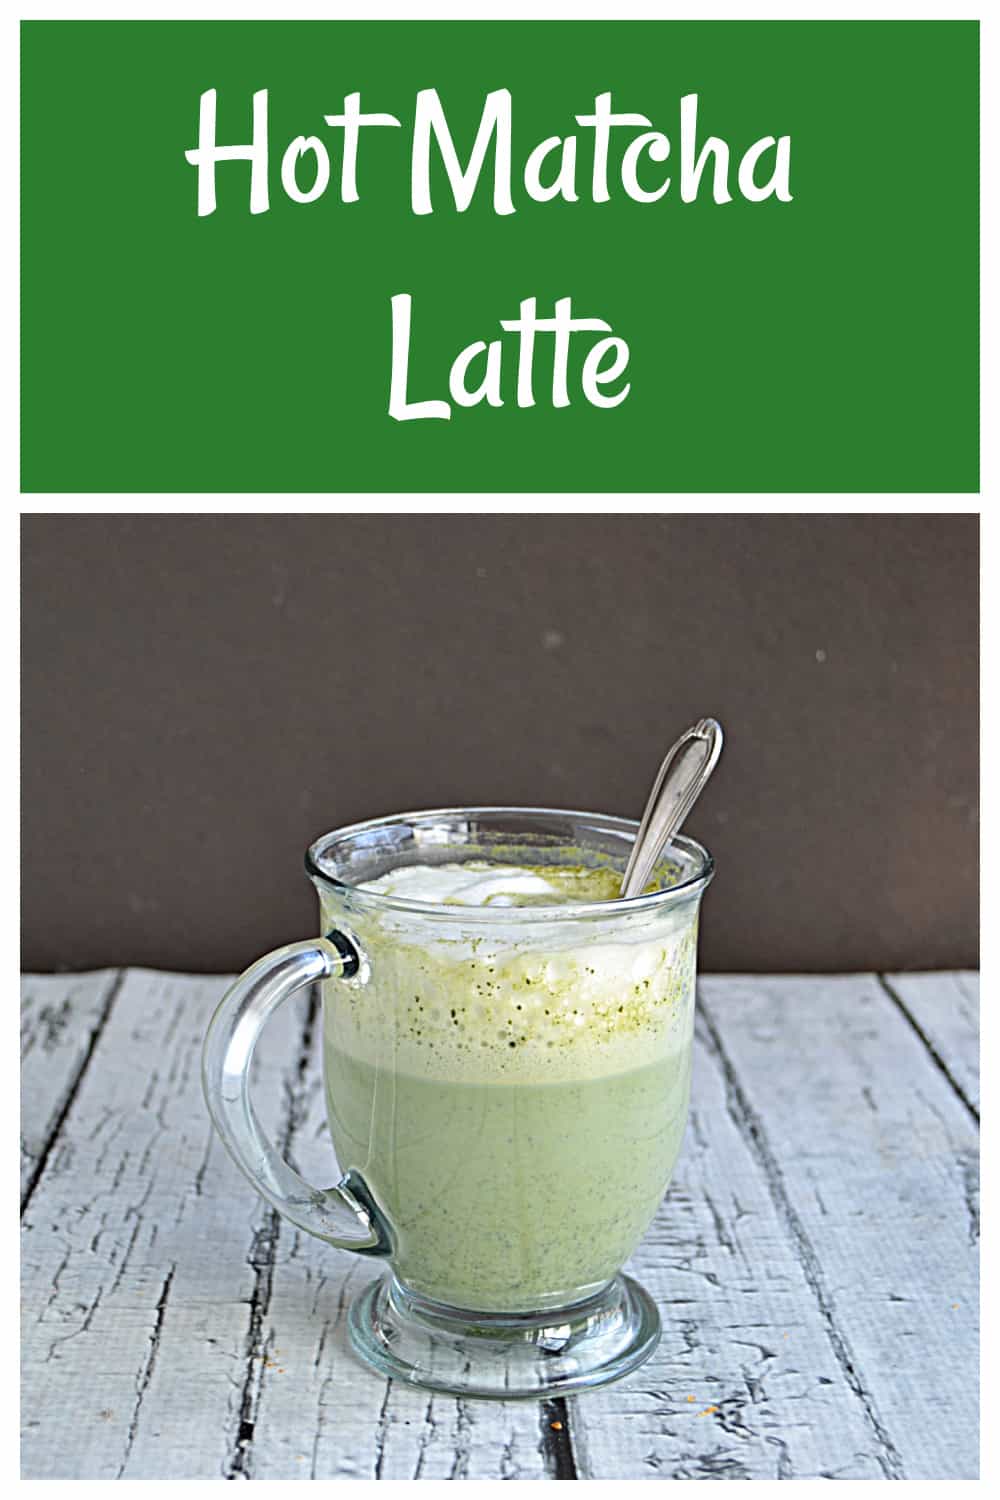 Pin Image: Text title, a mug of green tea hot matcha latte.